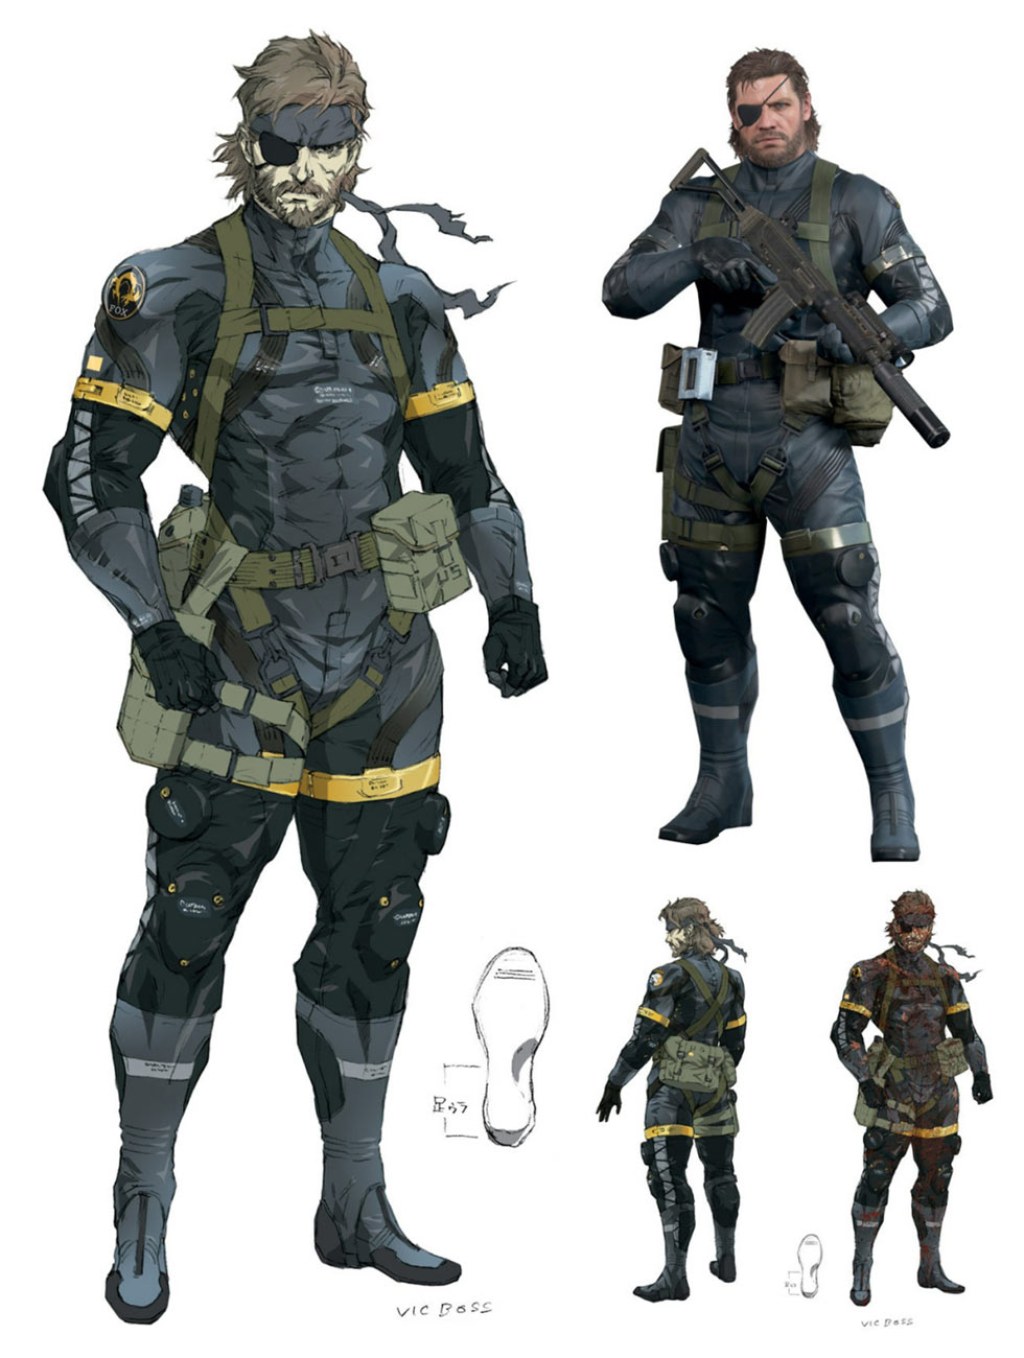 solid snake concept art - Snake Concept Art - Metal Gear Solid V Art Gallery